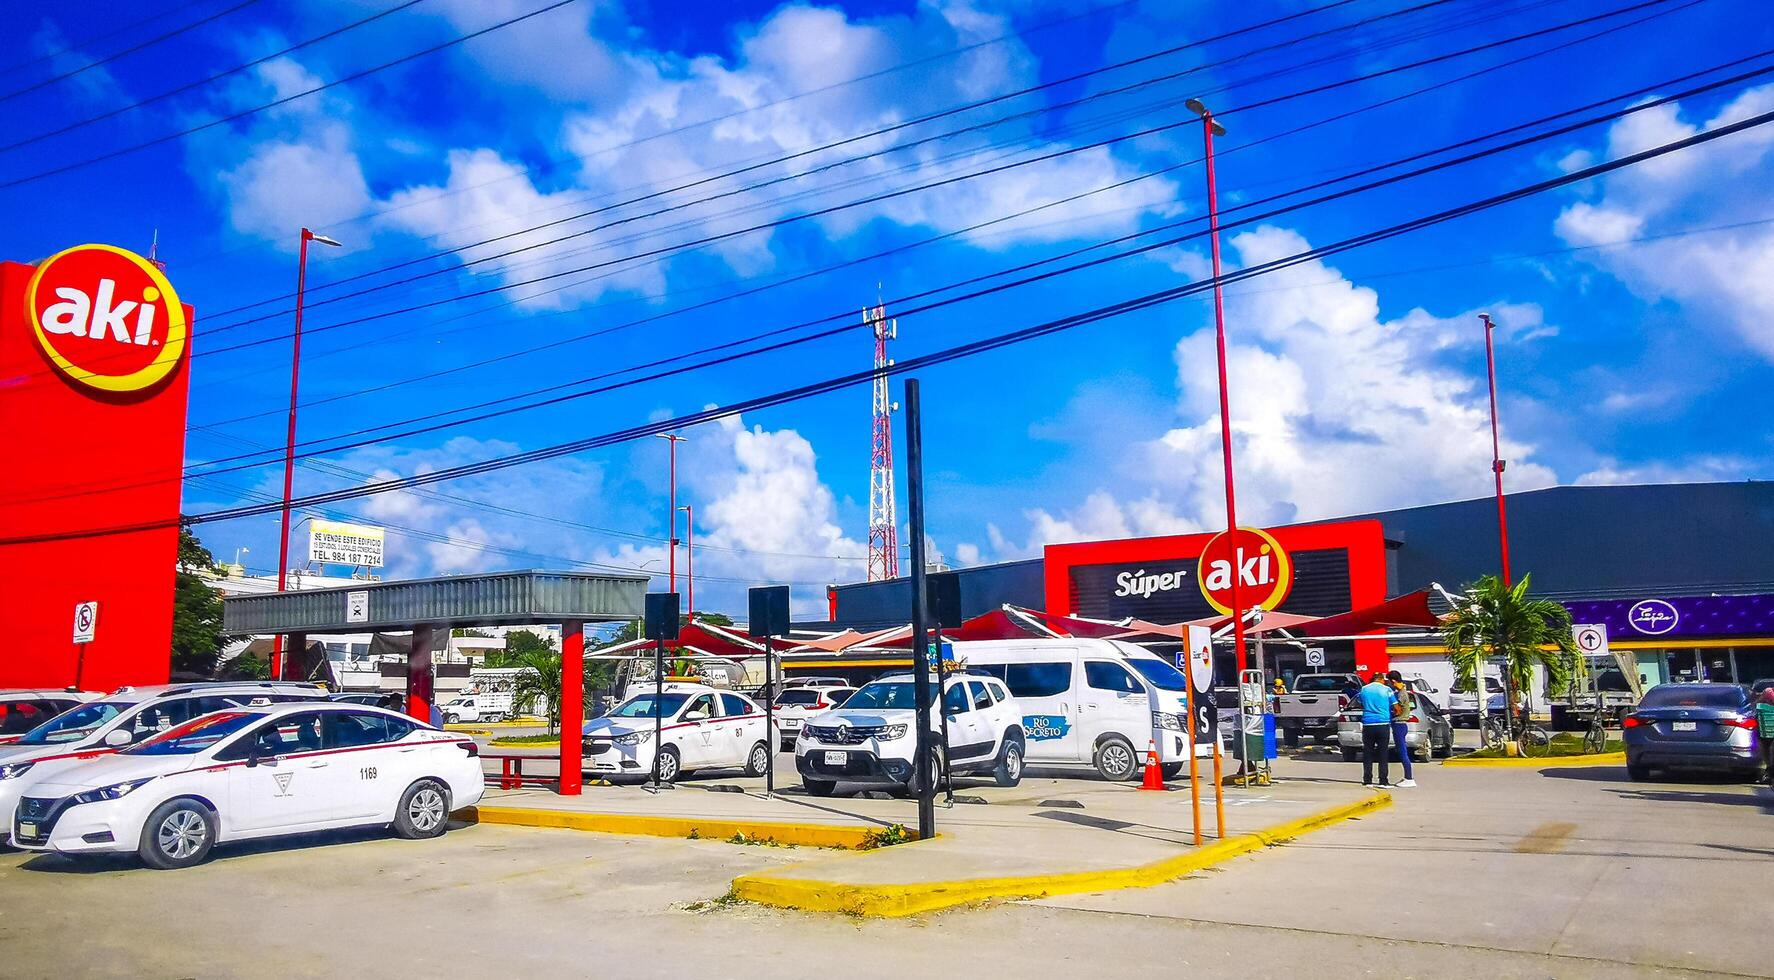 Tulum quintana roo mexico 2023 súper aki supermercado mercado Tienda tienda Entrada en Tulum México. foto